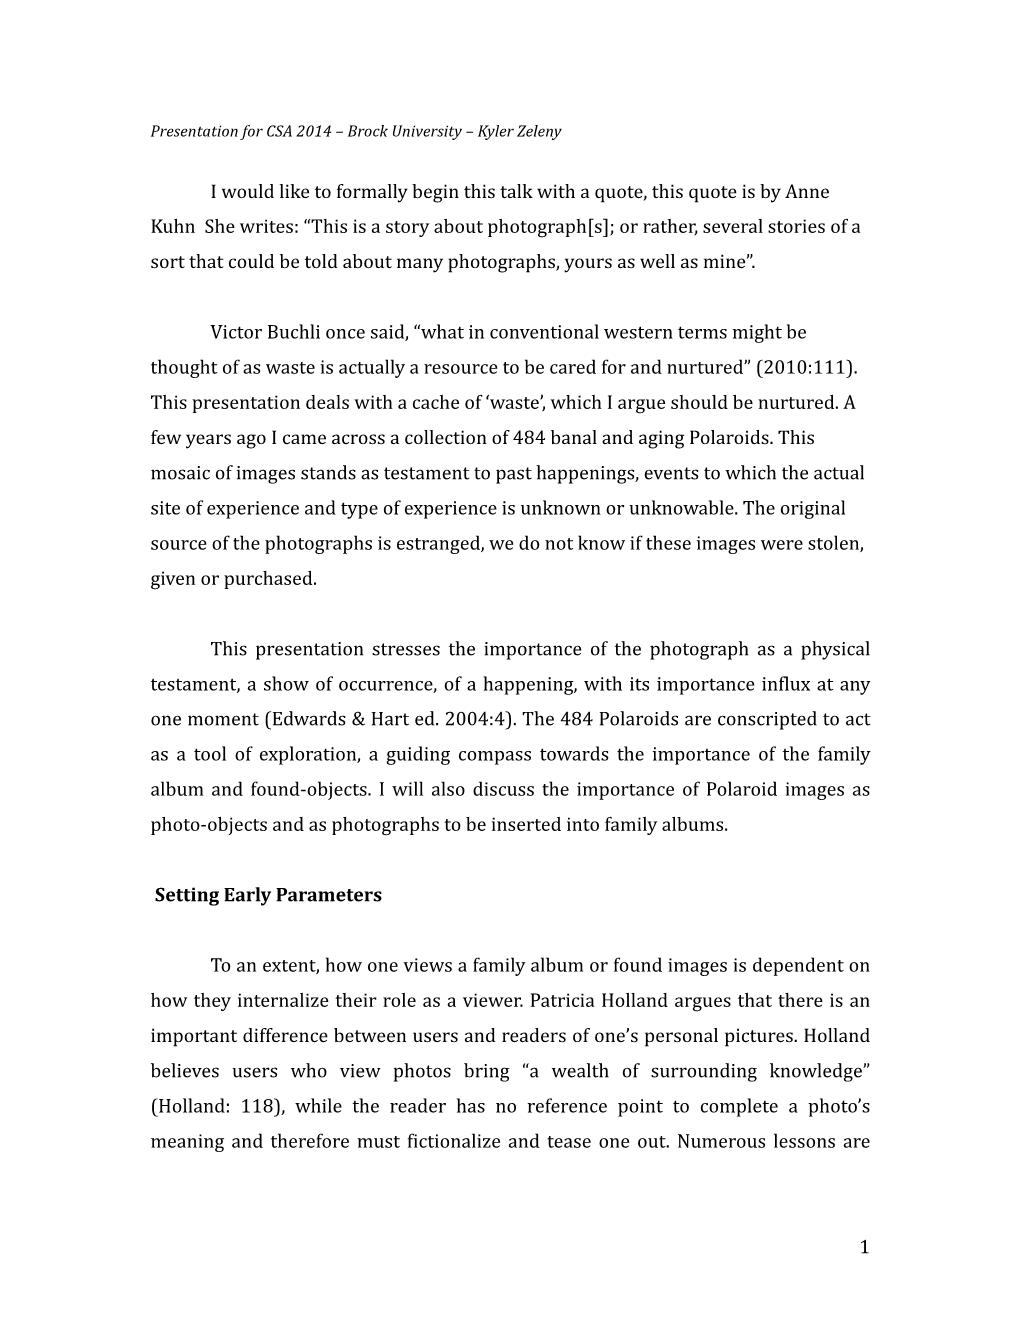 PDF – Presentation for CSA 2014 – Brock University